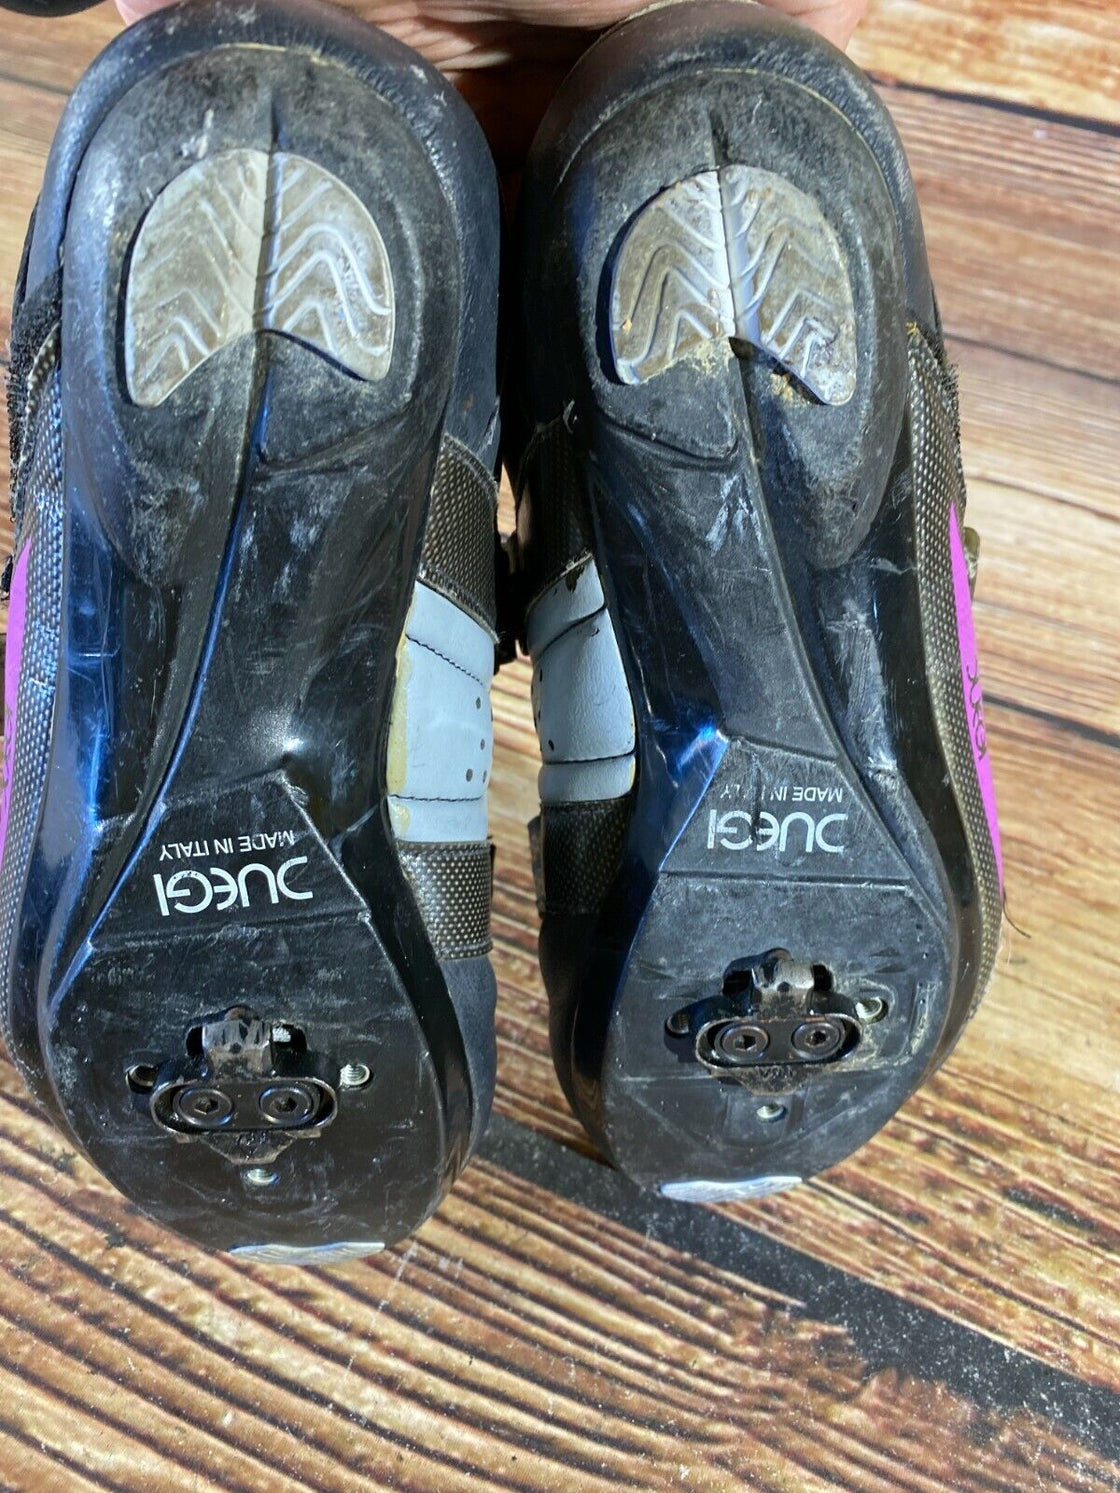 DUEGI Vintage Road Cycling Shoes Road Bike Boots 3 Bolts Size EU42, US8